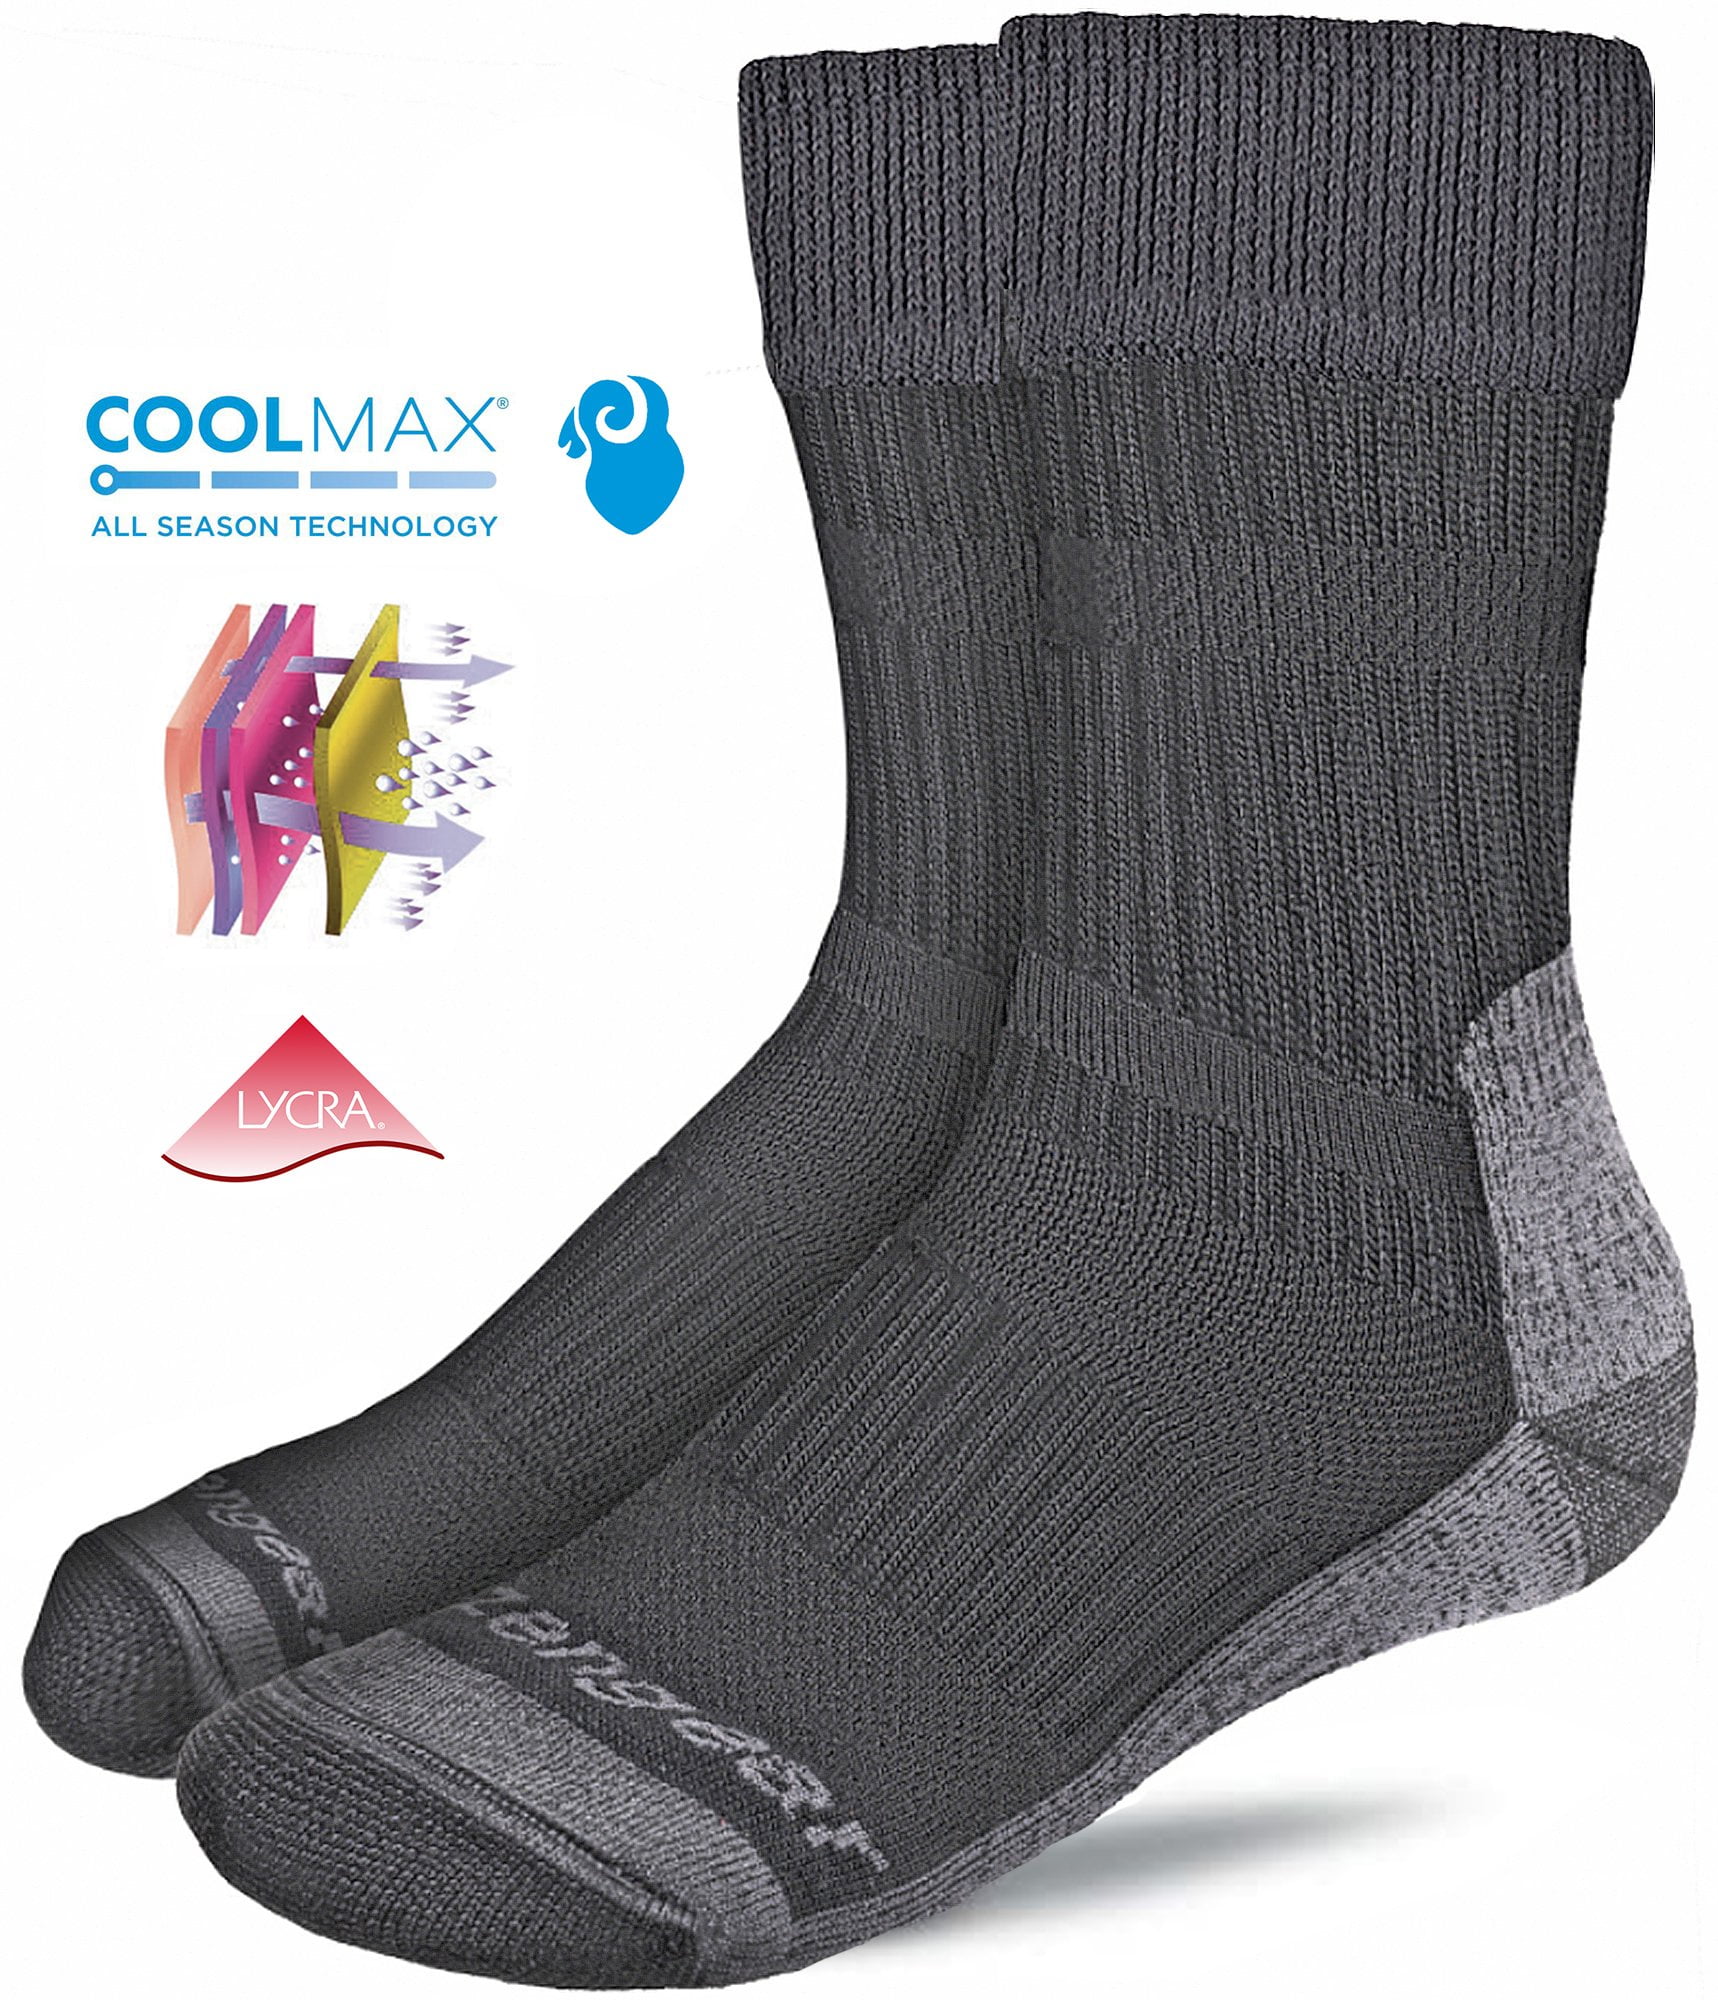 3 pairs of Ladies Cotton Coolmax Walking Socks